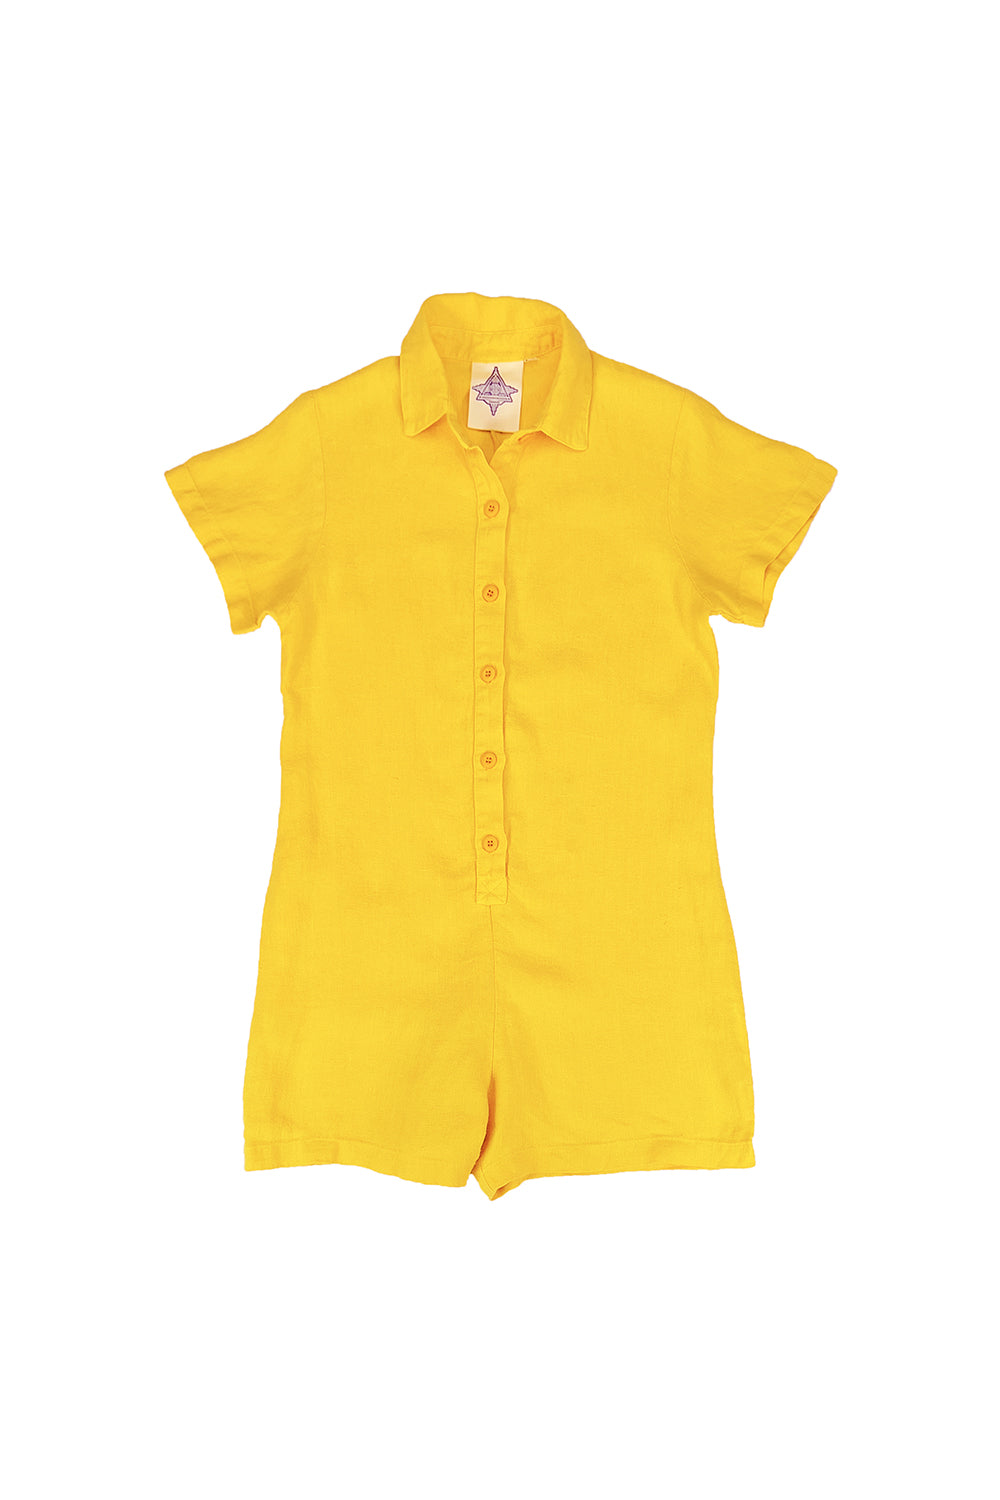 Stillwater Polo Romper - Sale Colors | Jungmaven Hemp Clothing & Accessories / Color: Sunshine Yellow